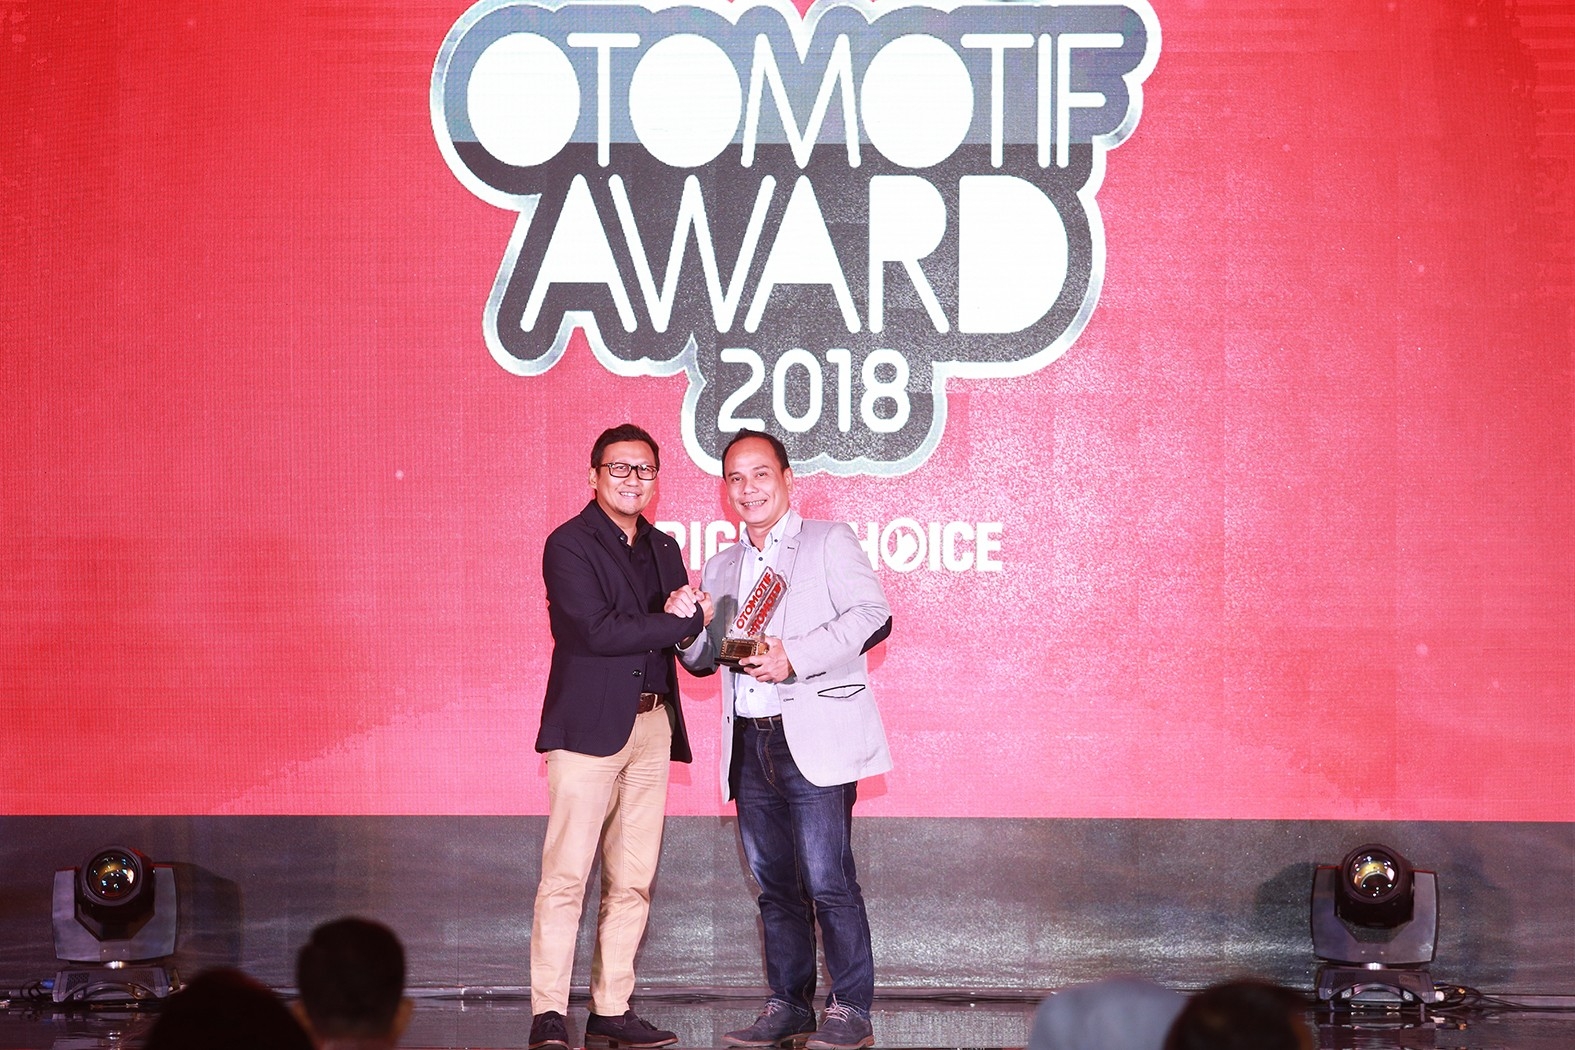 All New Mazda CX-5 Raih Kategori “Best of the Best SUV” di Ajang OTOMOTIF Award 2018